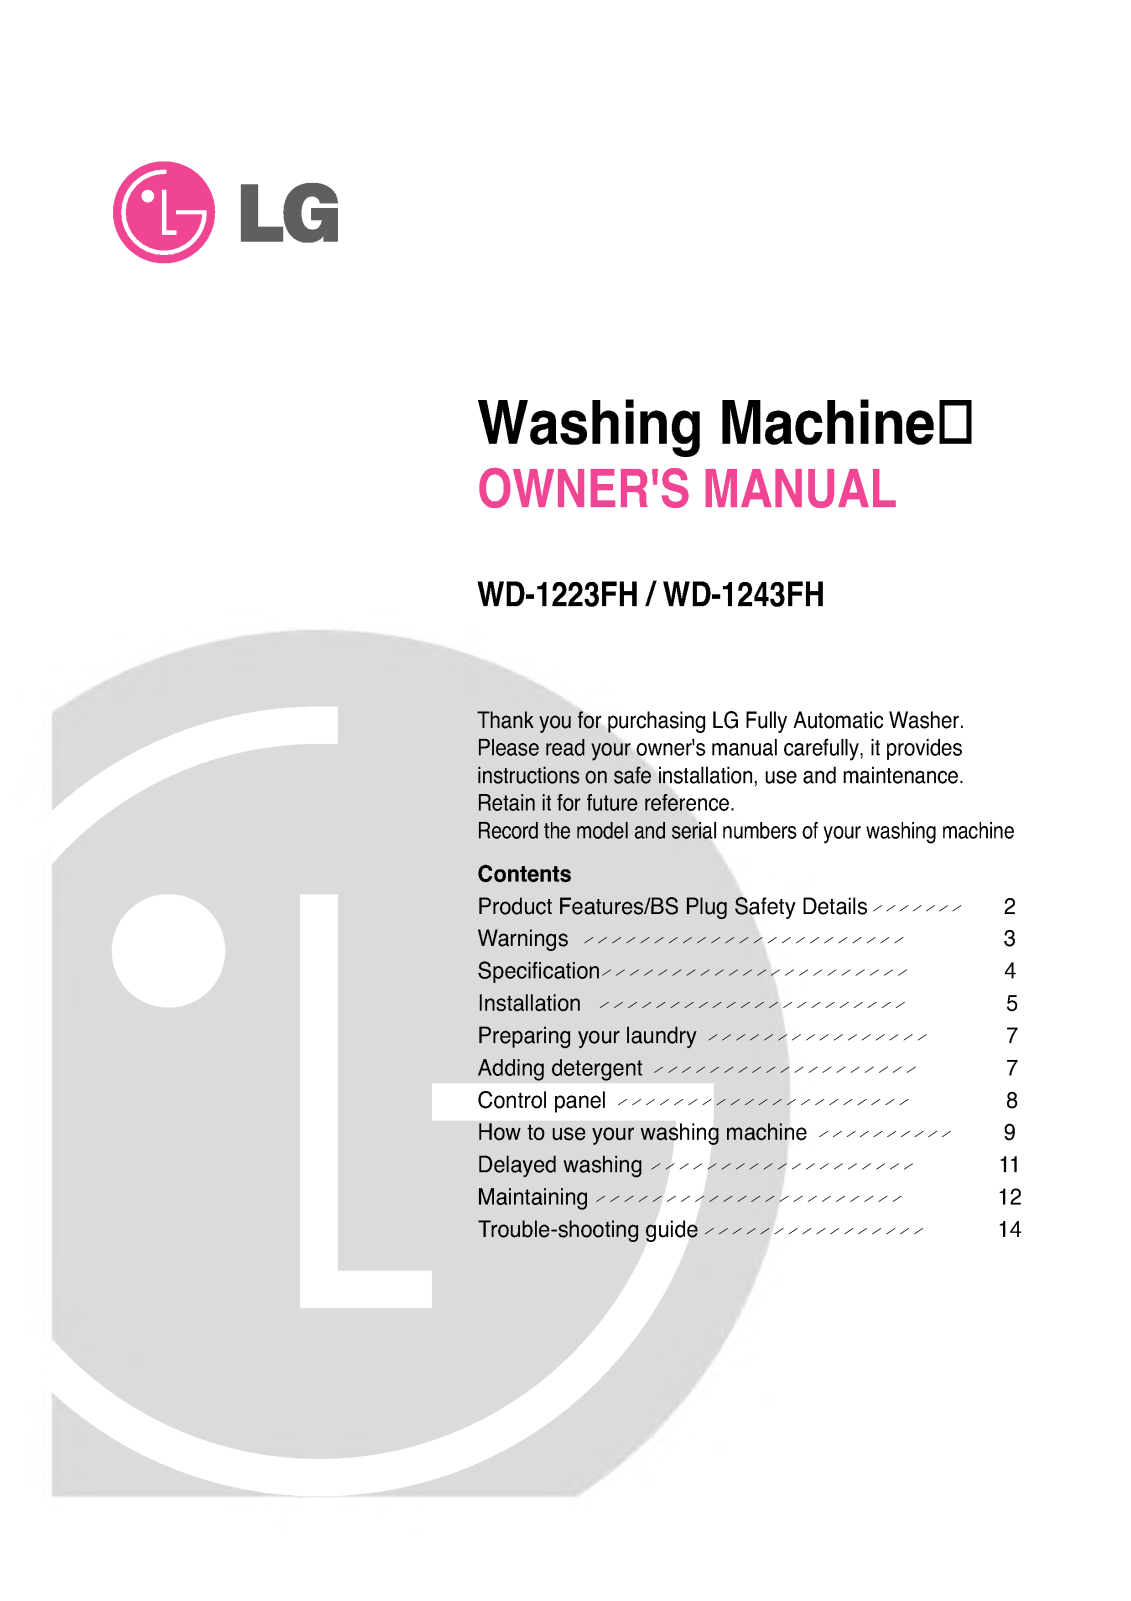 LG WD-1243FH User Manual